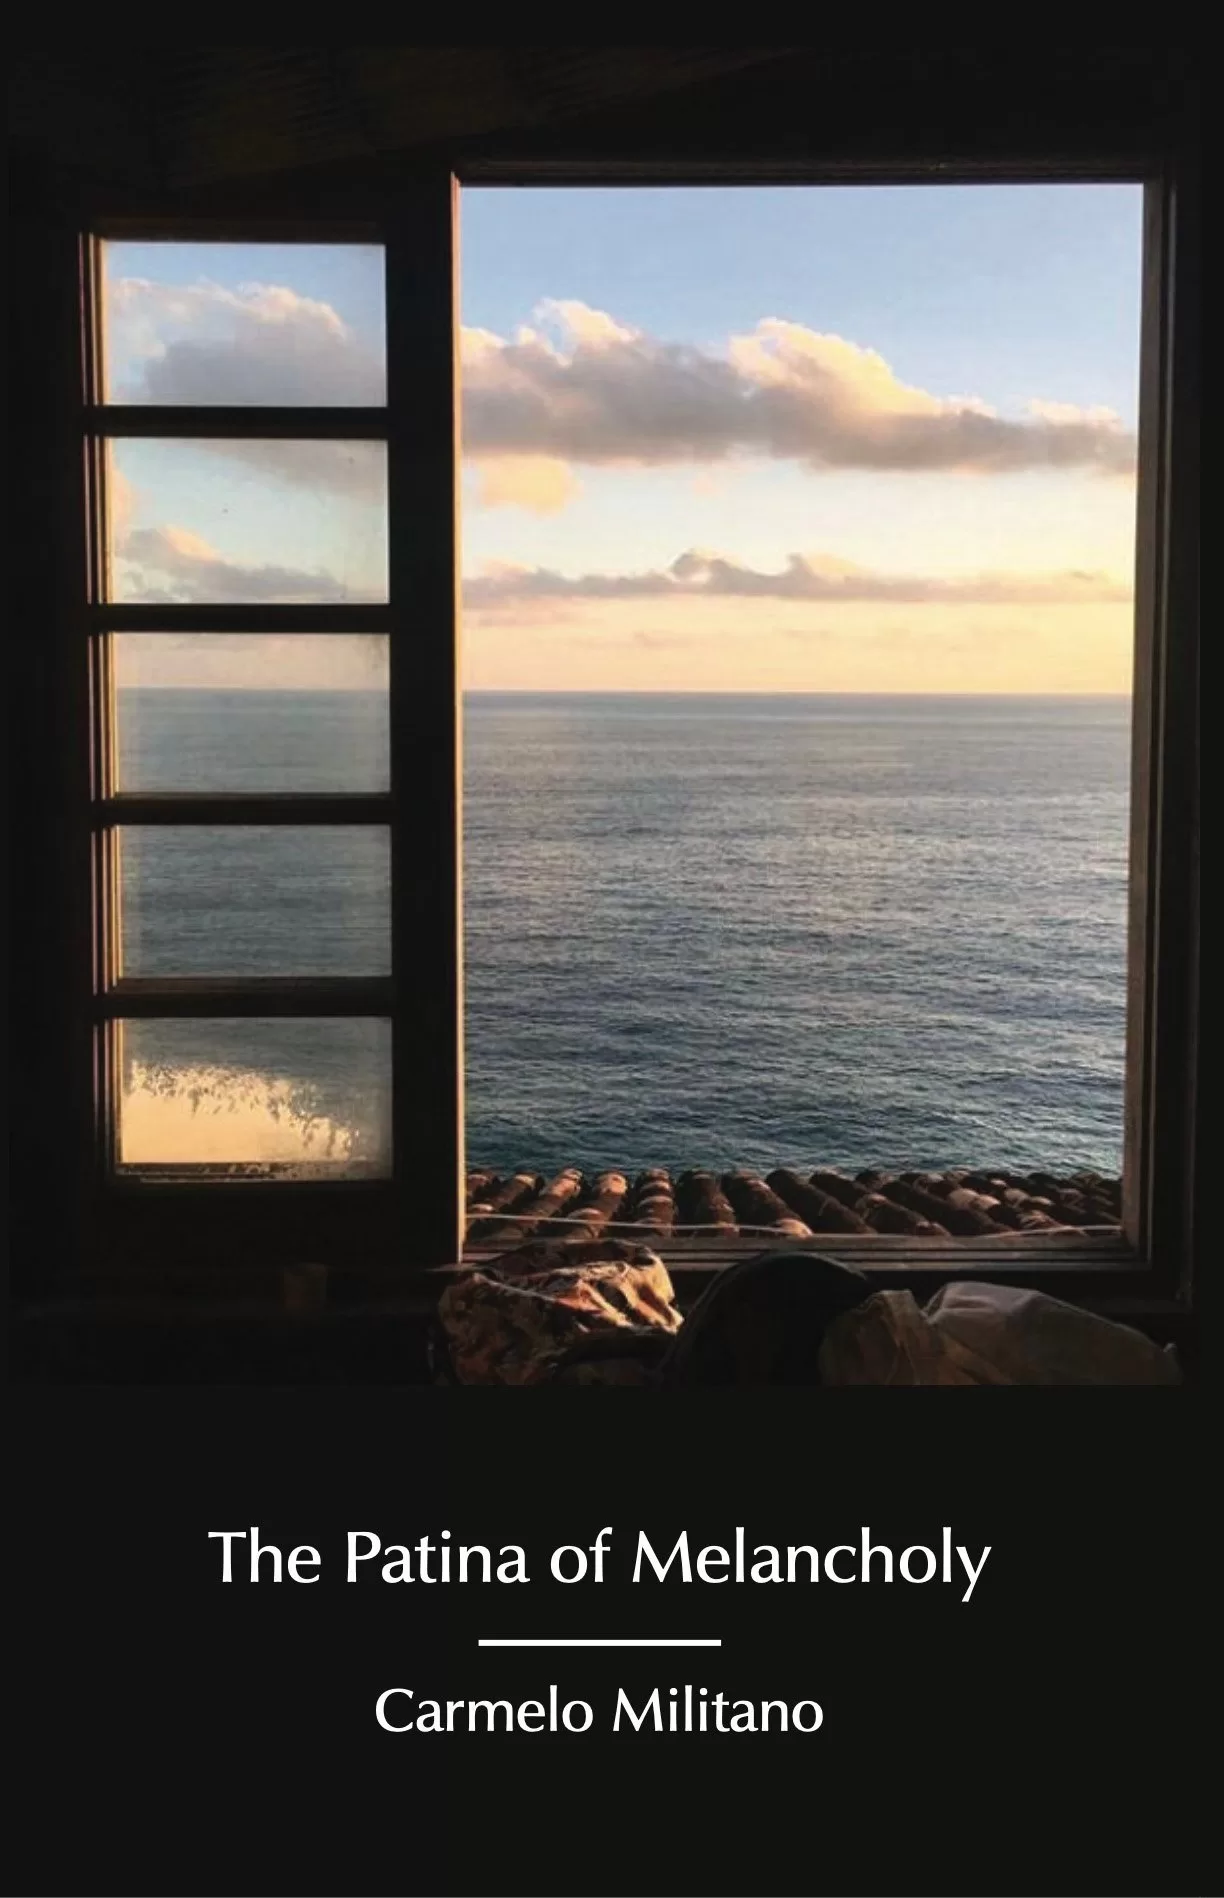 The Patina of Melancholy by Carmelo Melitano